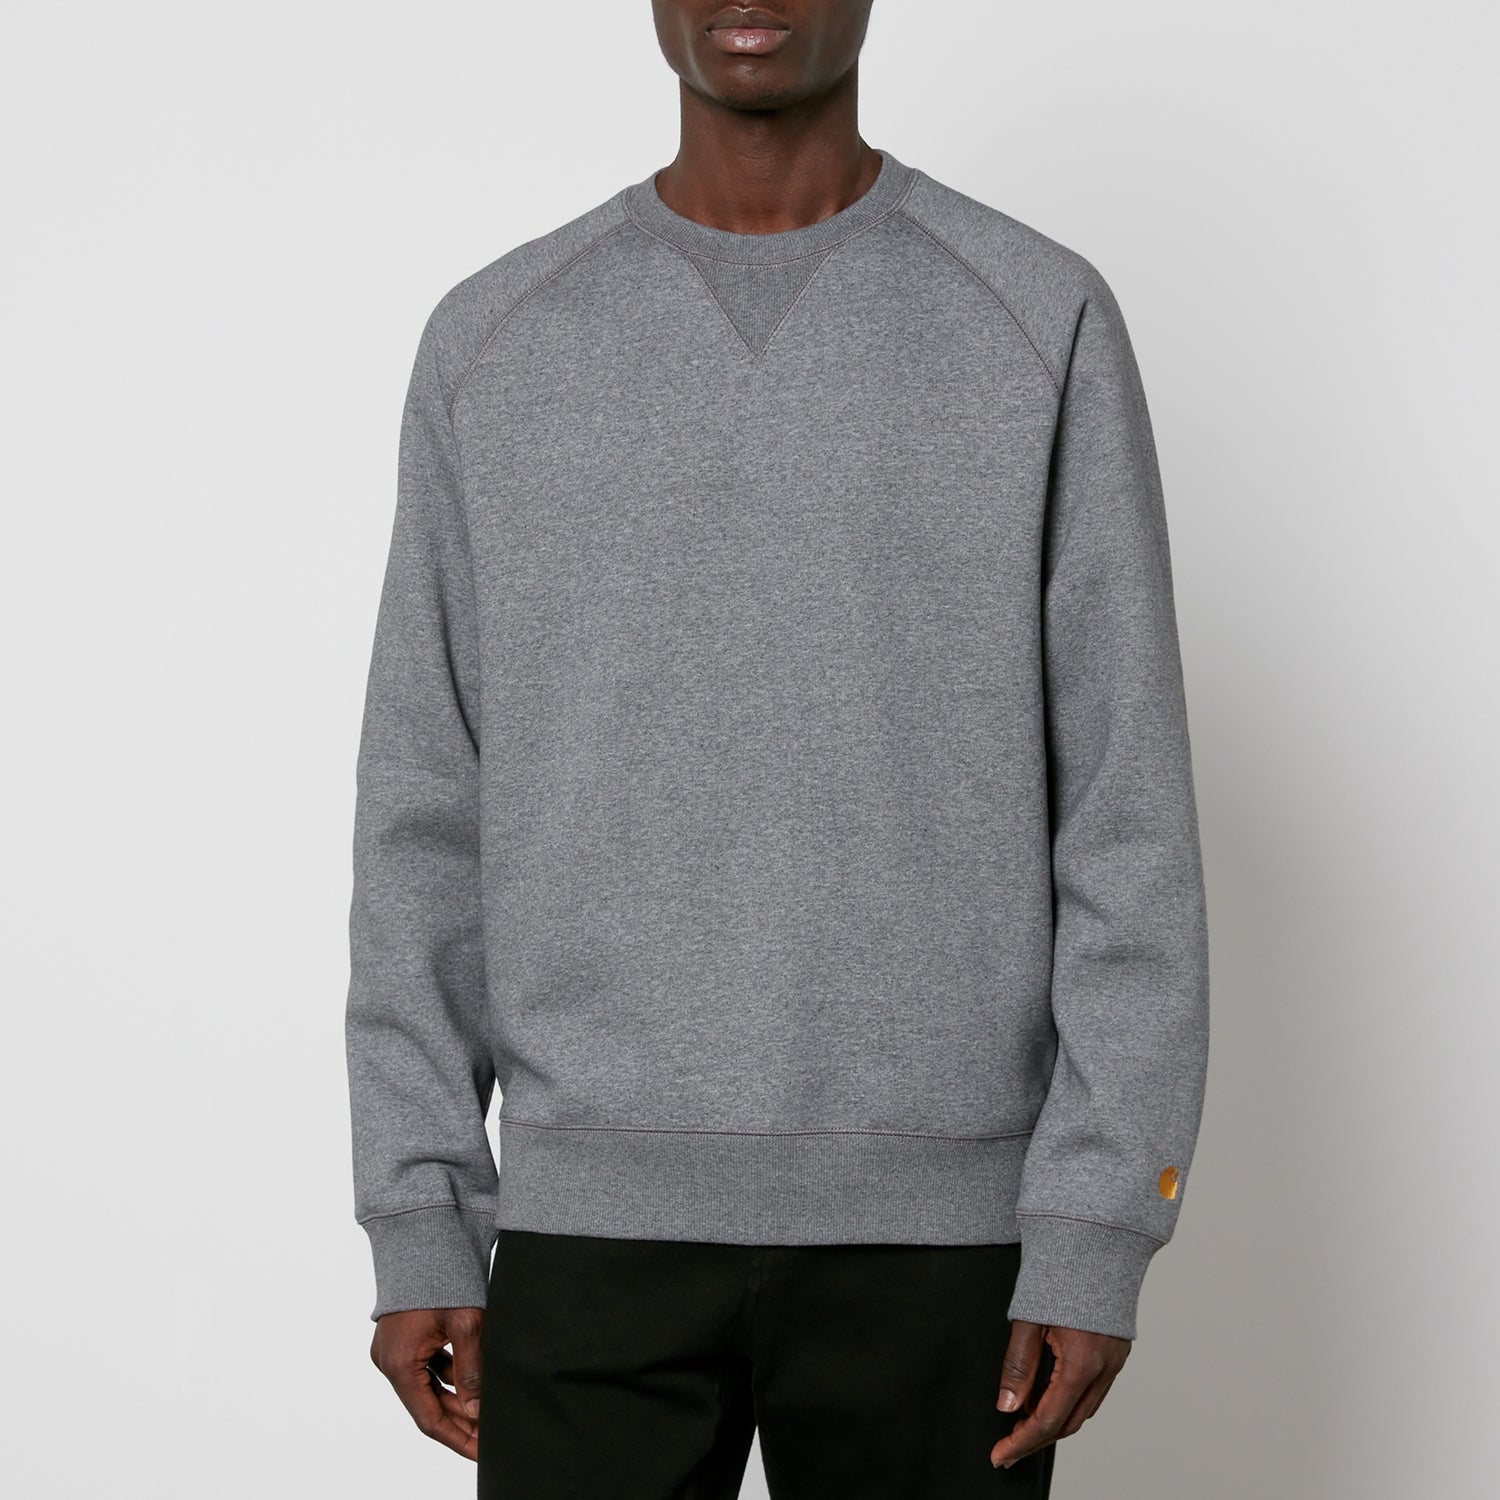 Carhartt WIP Chase Cotton-Blend Sweatshirt - XL